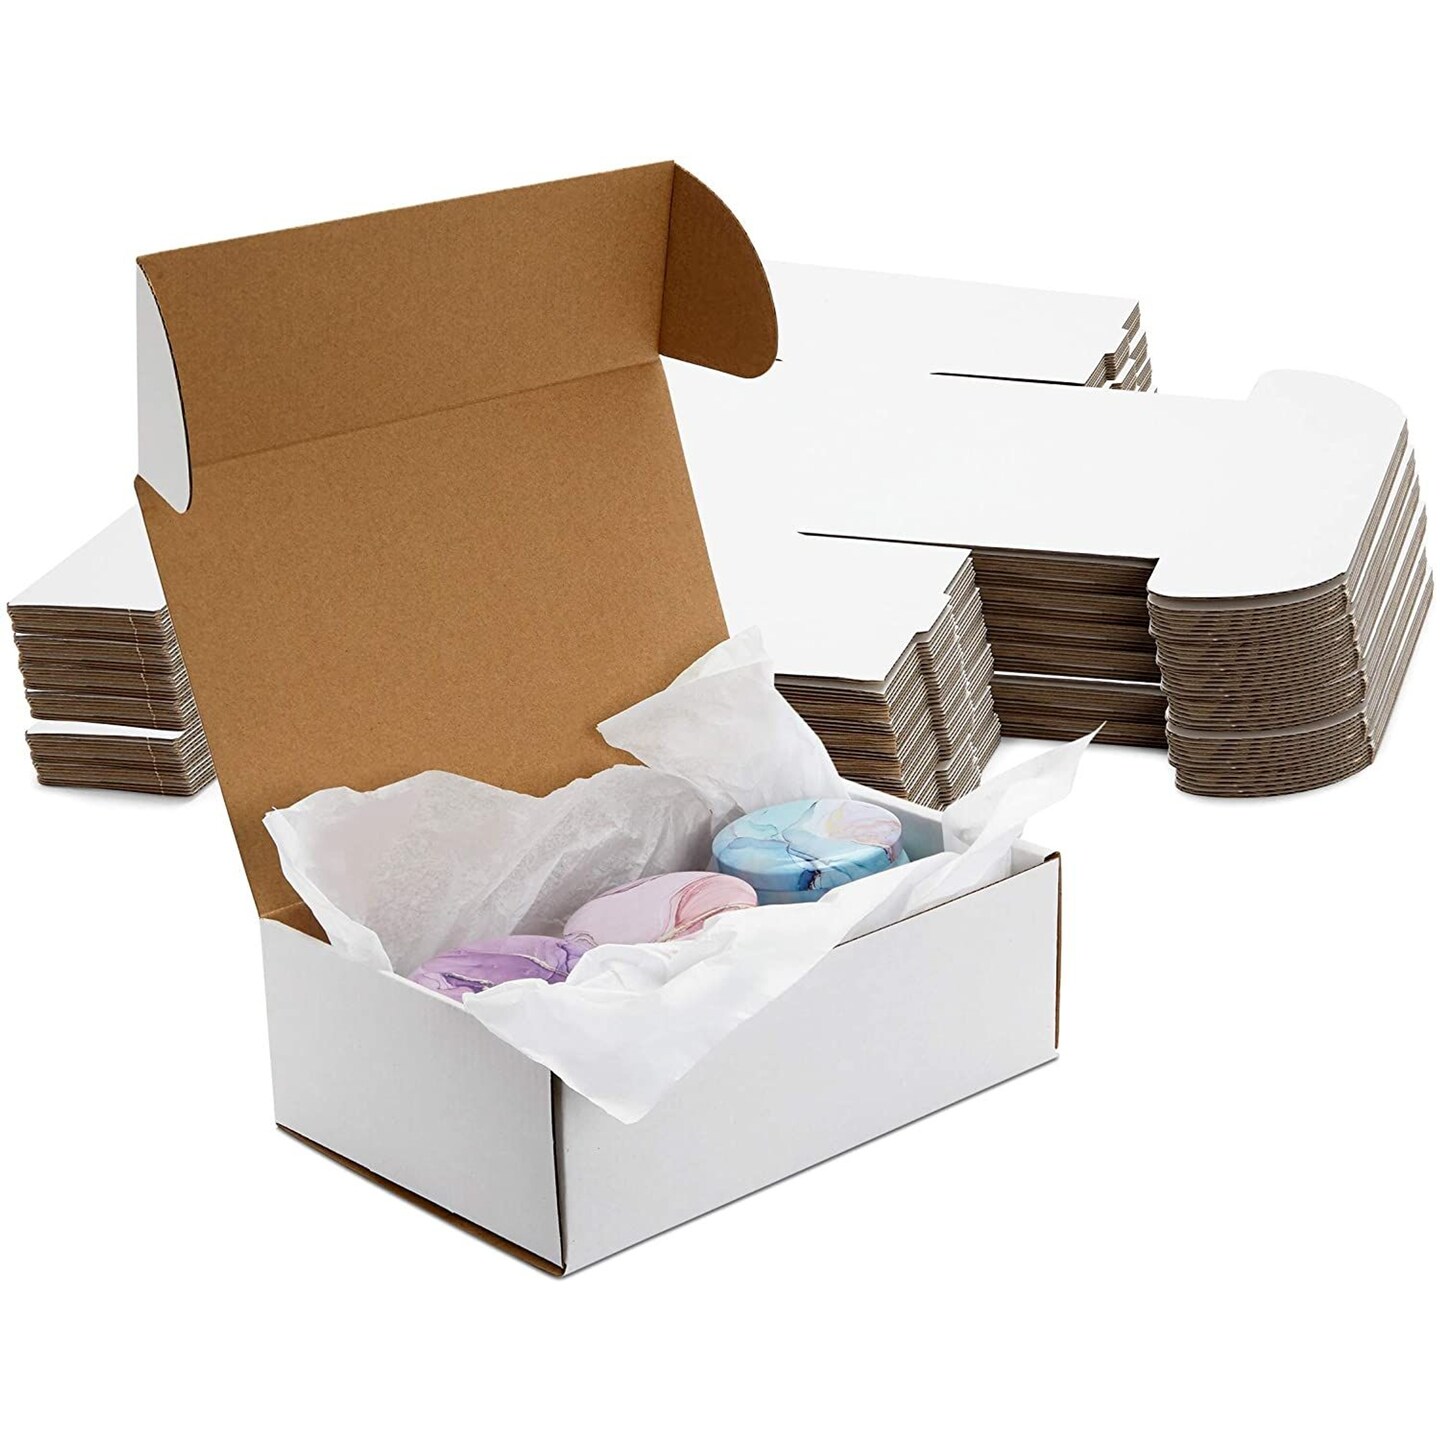 Custom Shipping Boxes: Kraft or White Boxes?